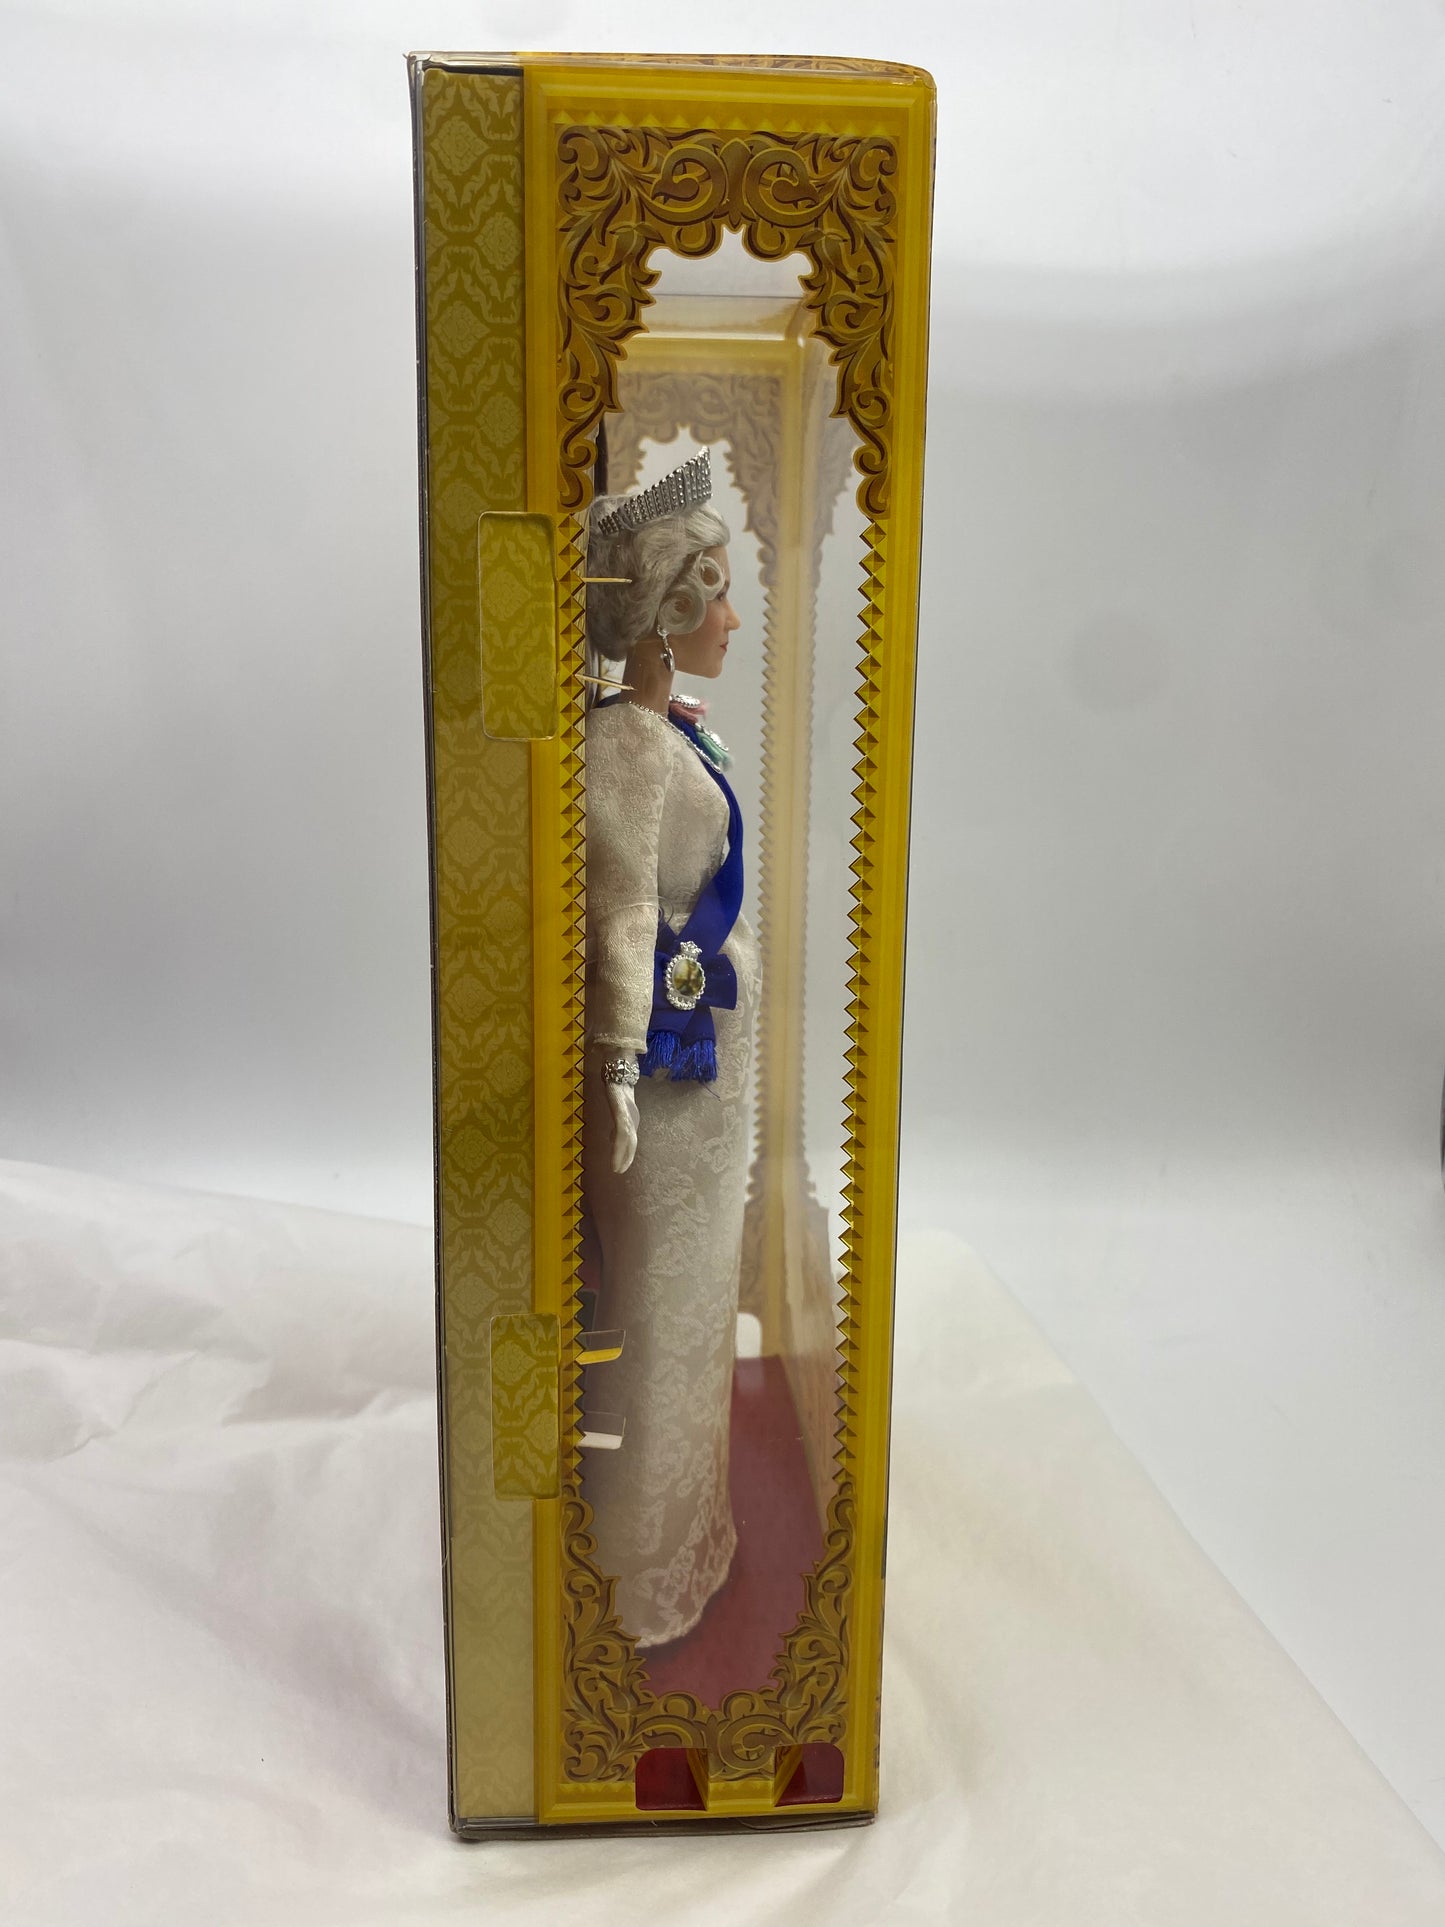 Mattel Barbie Queen Elizabeth II Doll 2 Platinum Jubilee Collector Signature